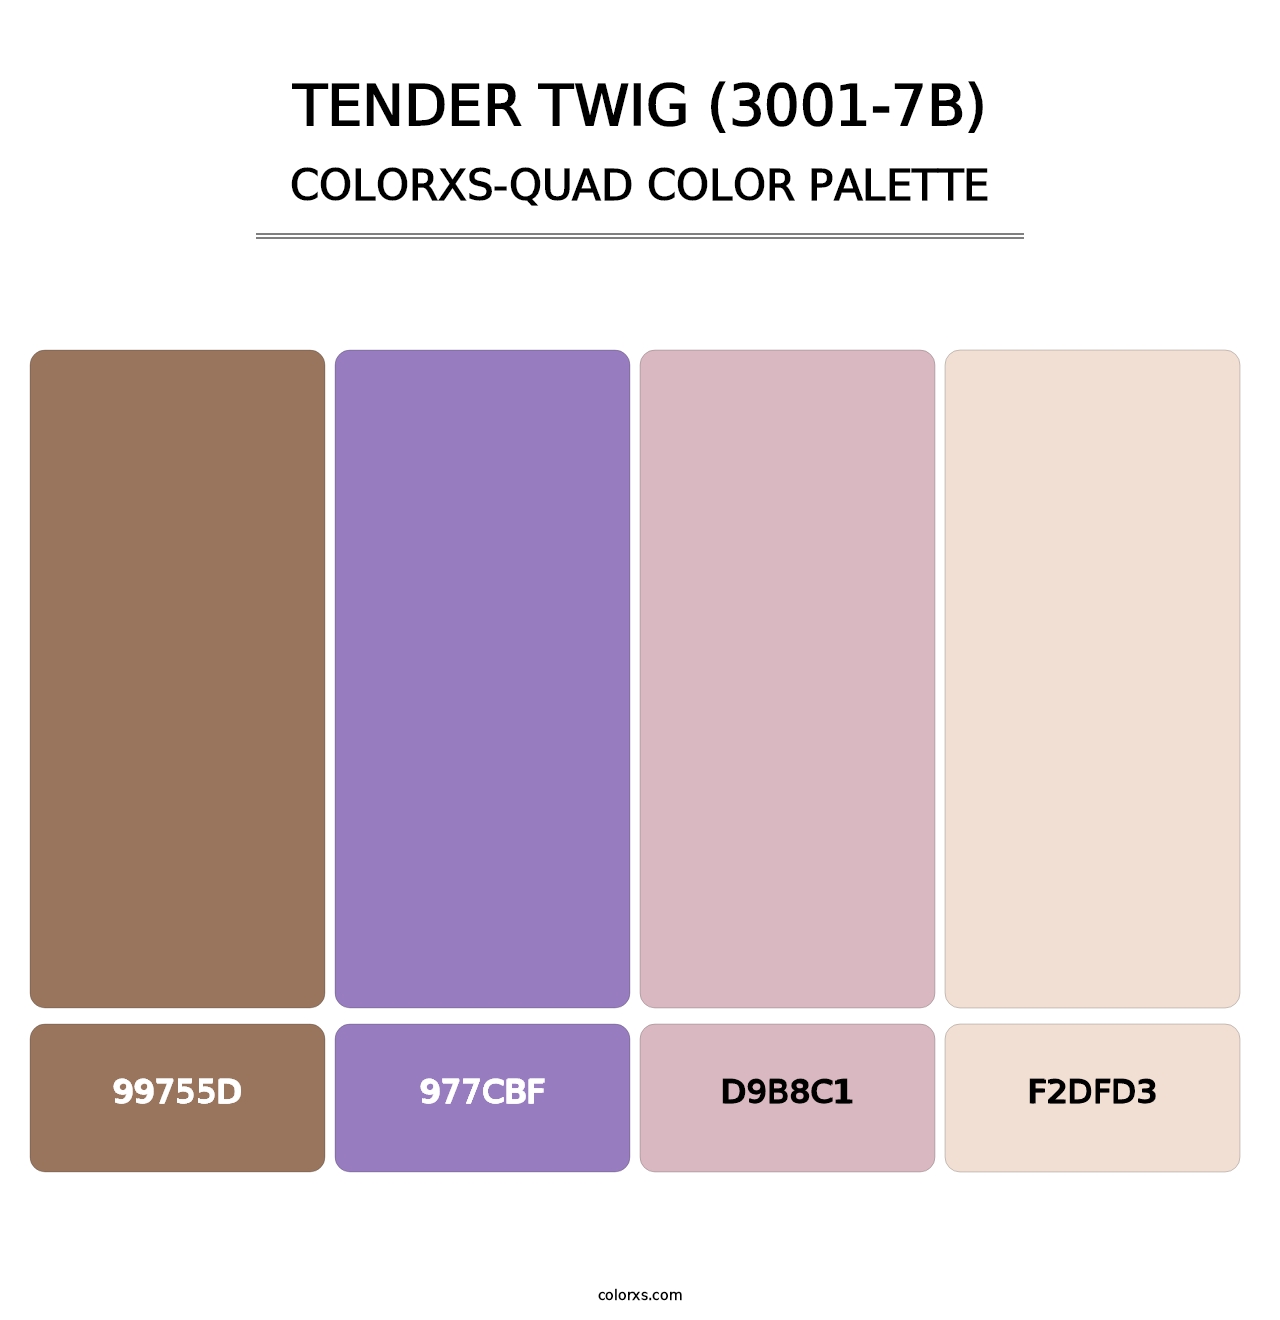 Tender Twig (3001-7B) - Colorxs Quad Palette